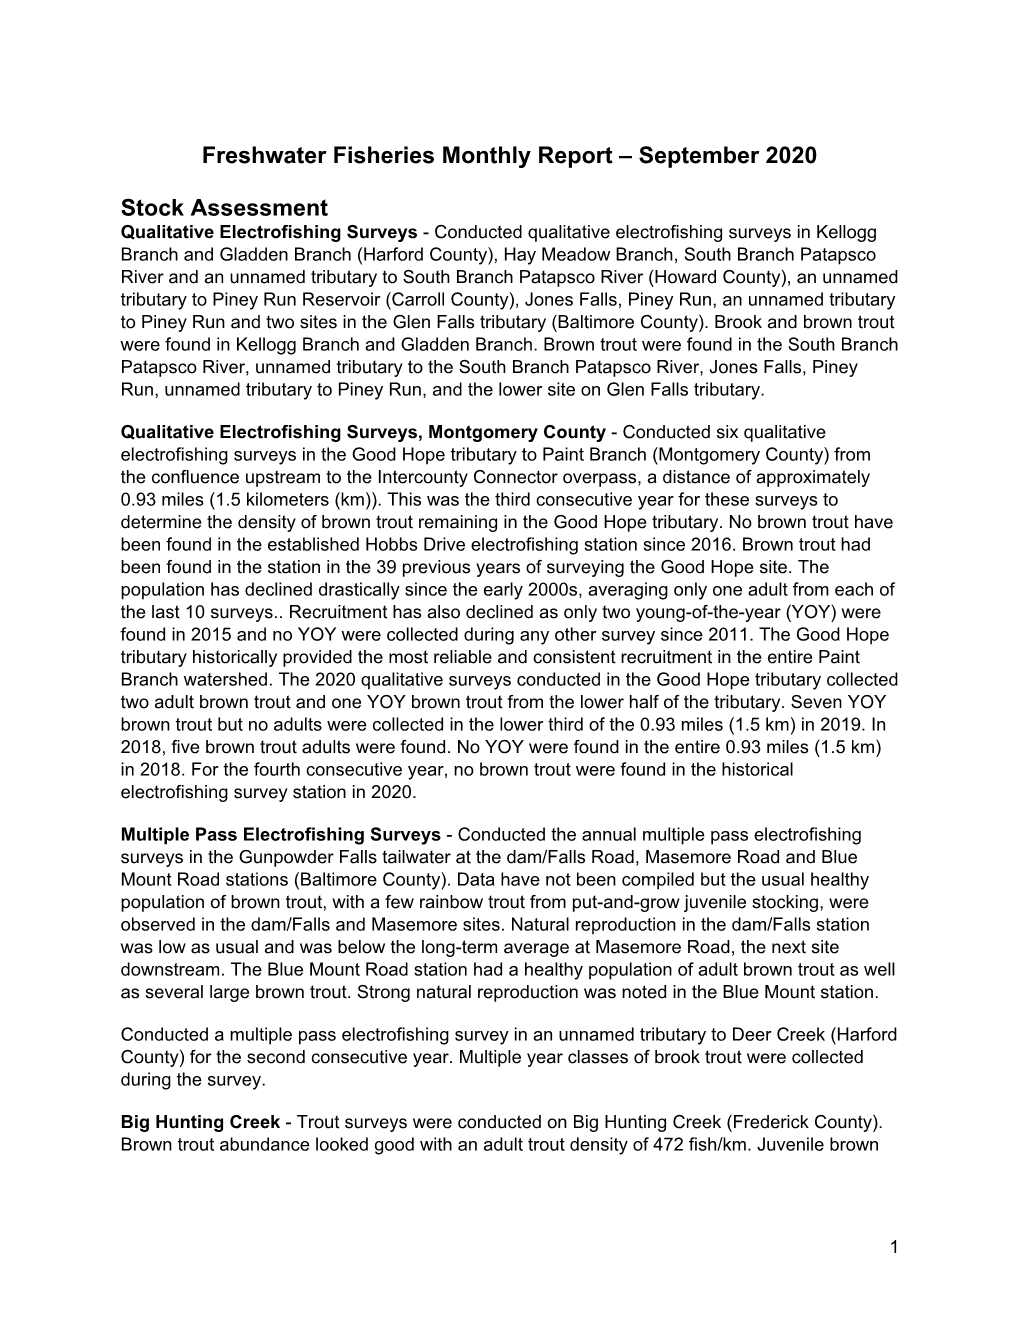 Freshwater Fisheries Monthly Report – September 2020 Stock Assessment